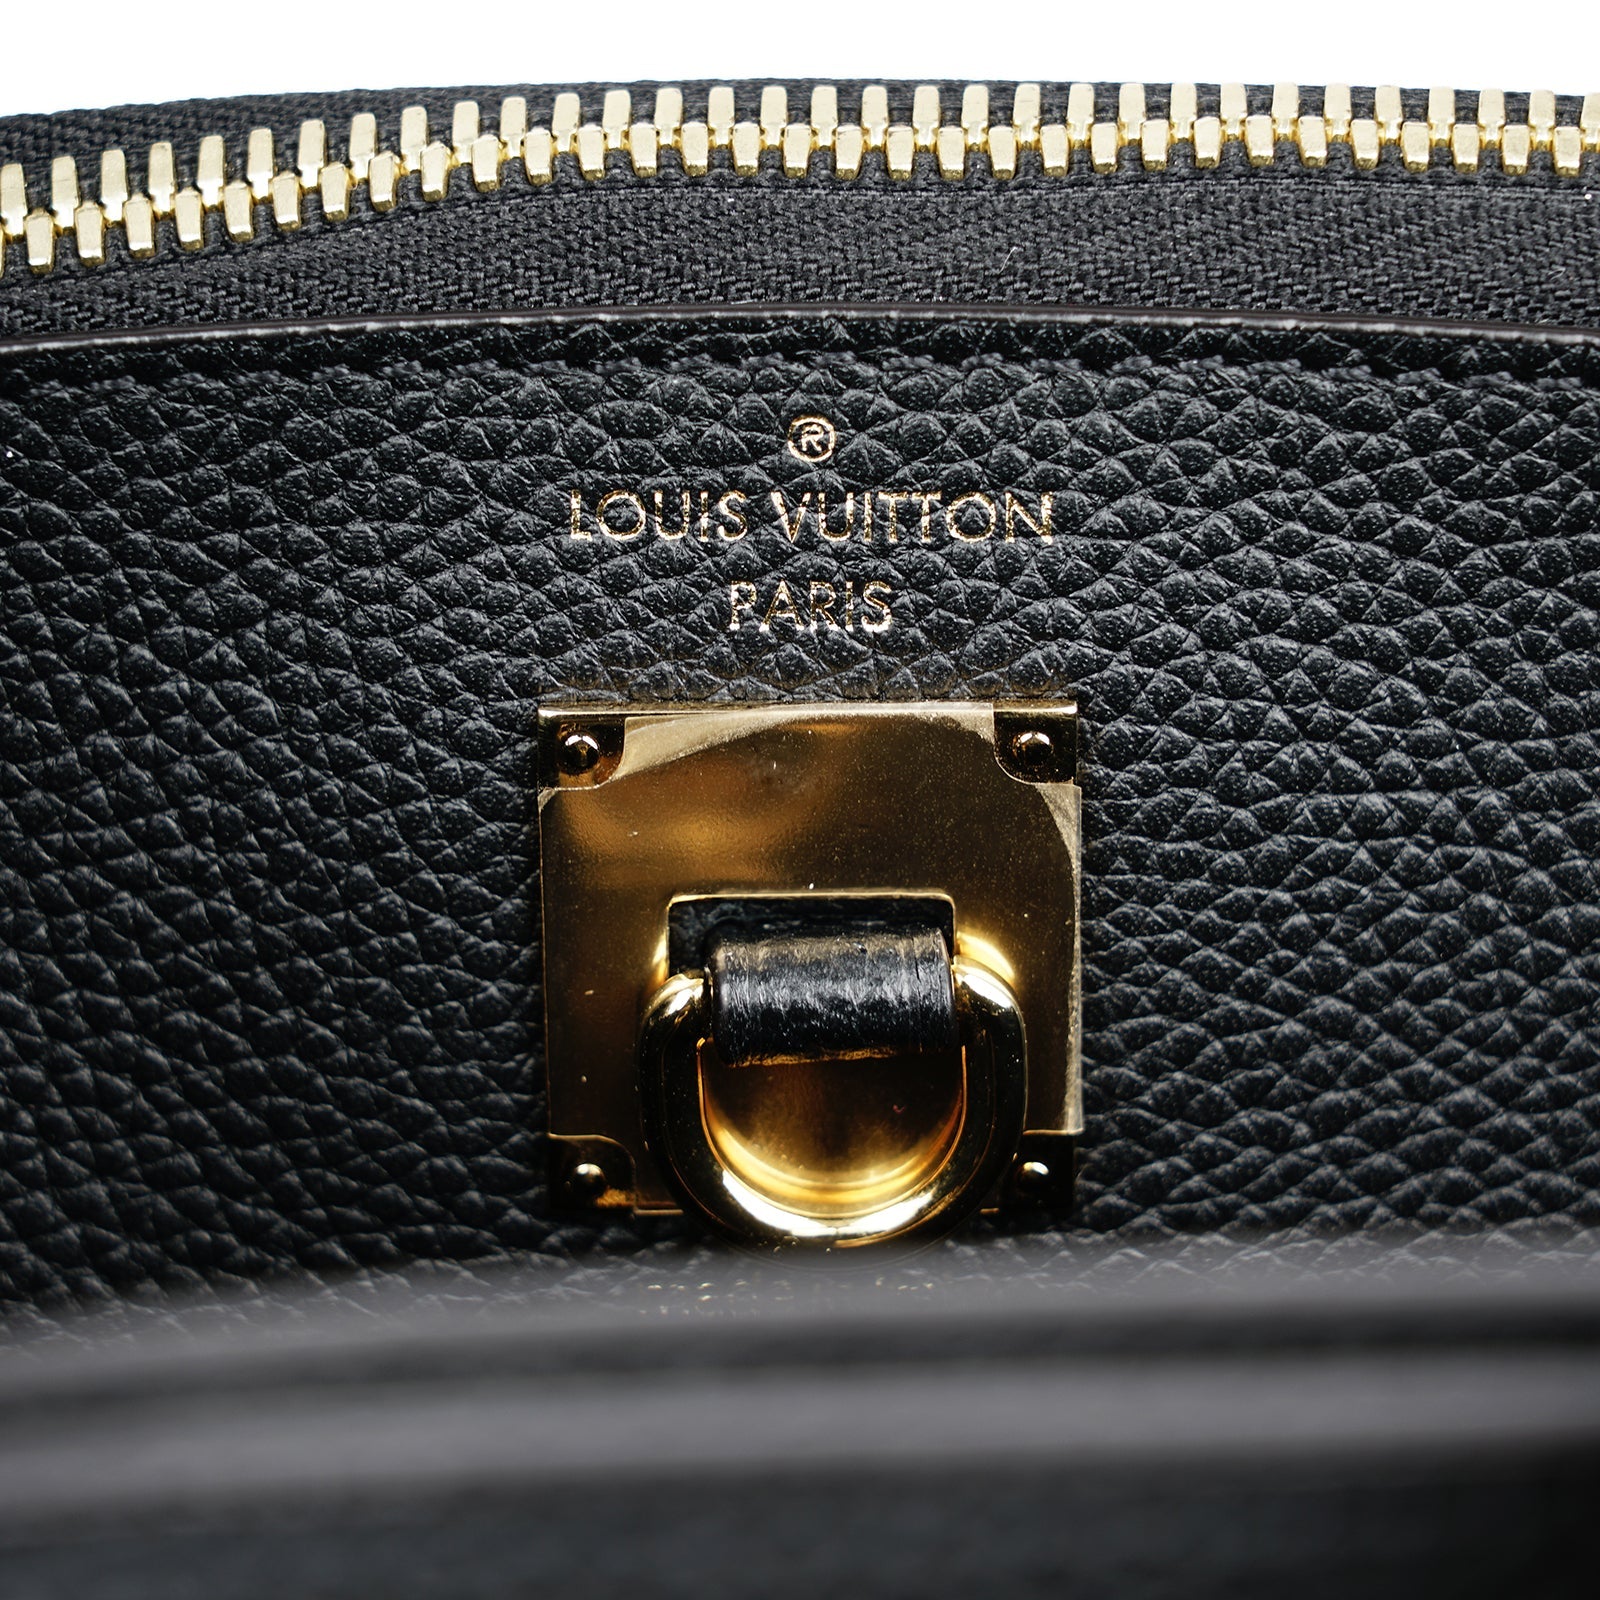 City Steamer PM Handbag - LOUIS VUITTON - Affordable Luxury image